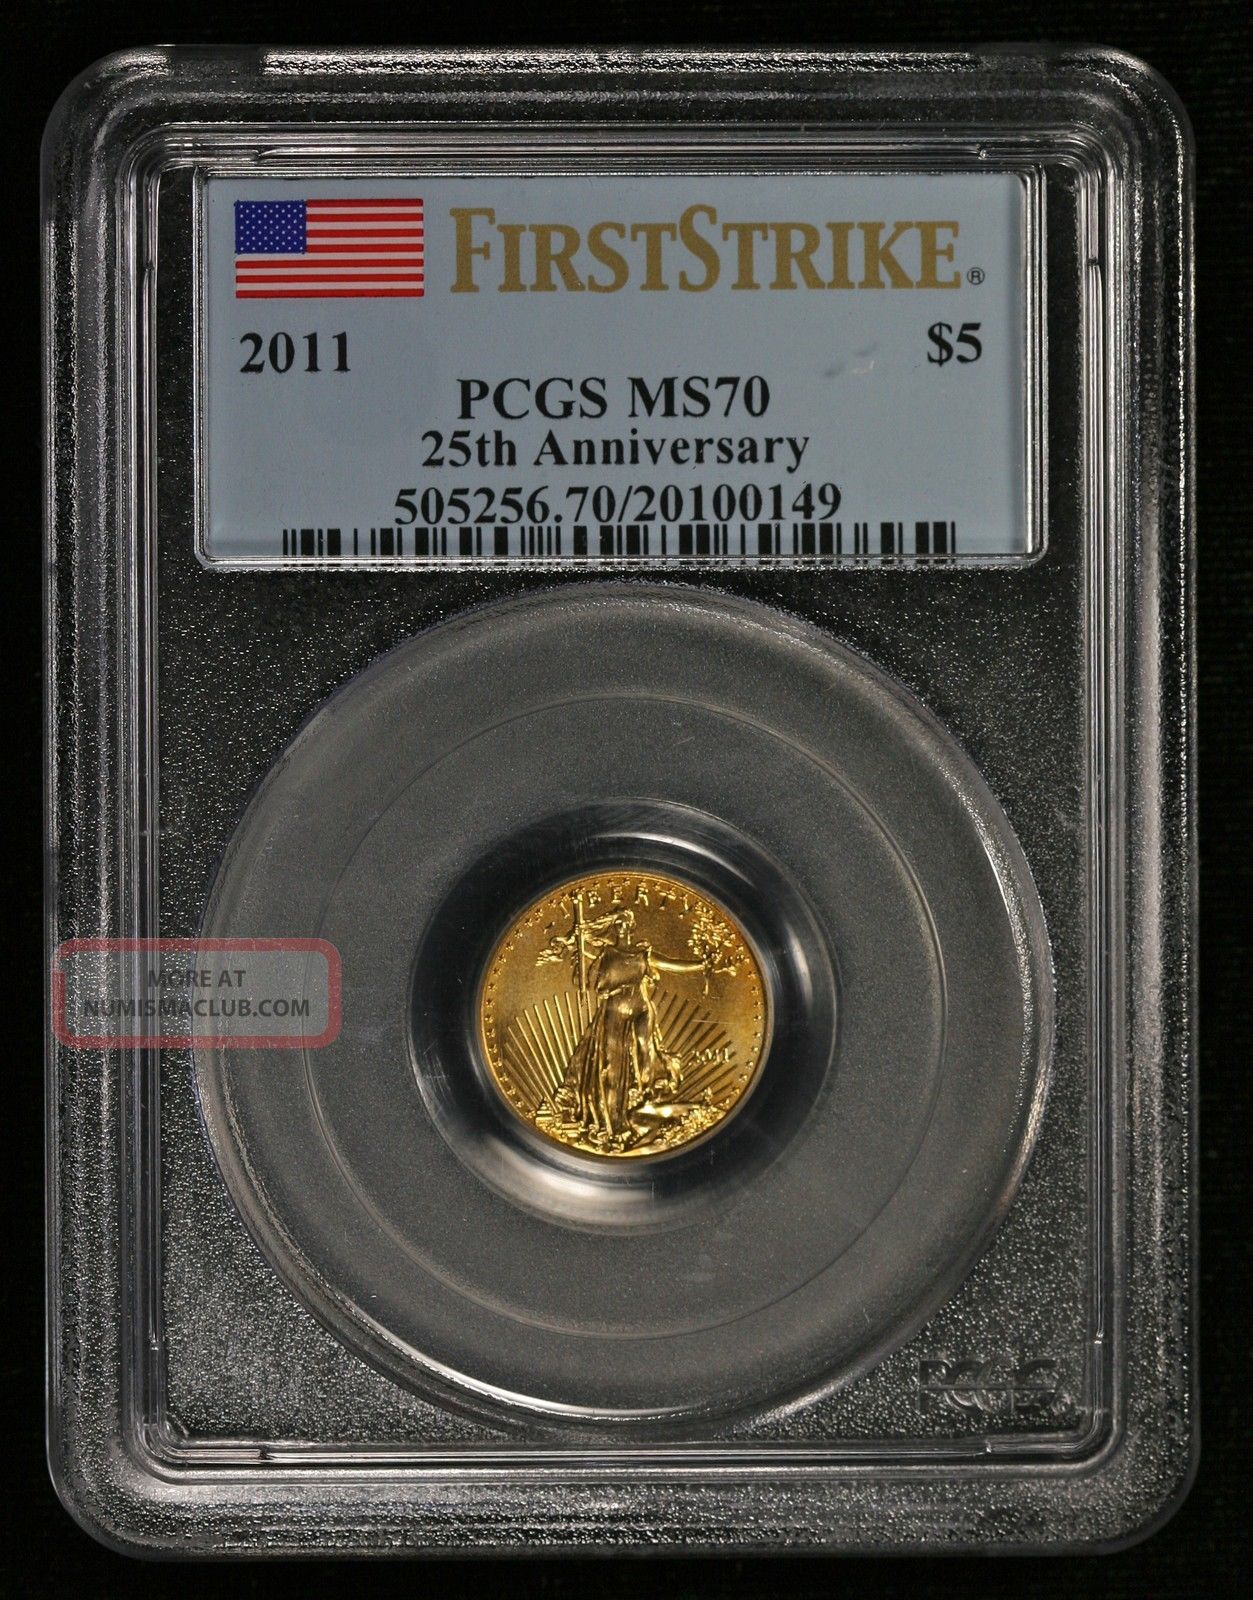 2011 Pcgs Ms70 First Strike 25th Anniversary 5 Dollar American Gold